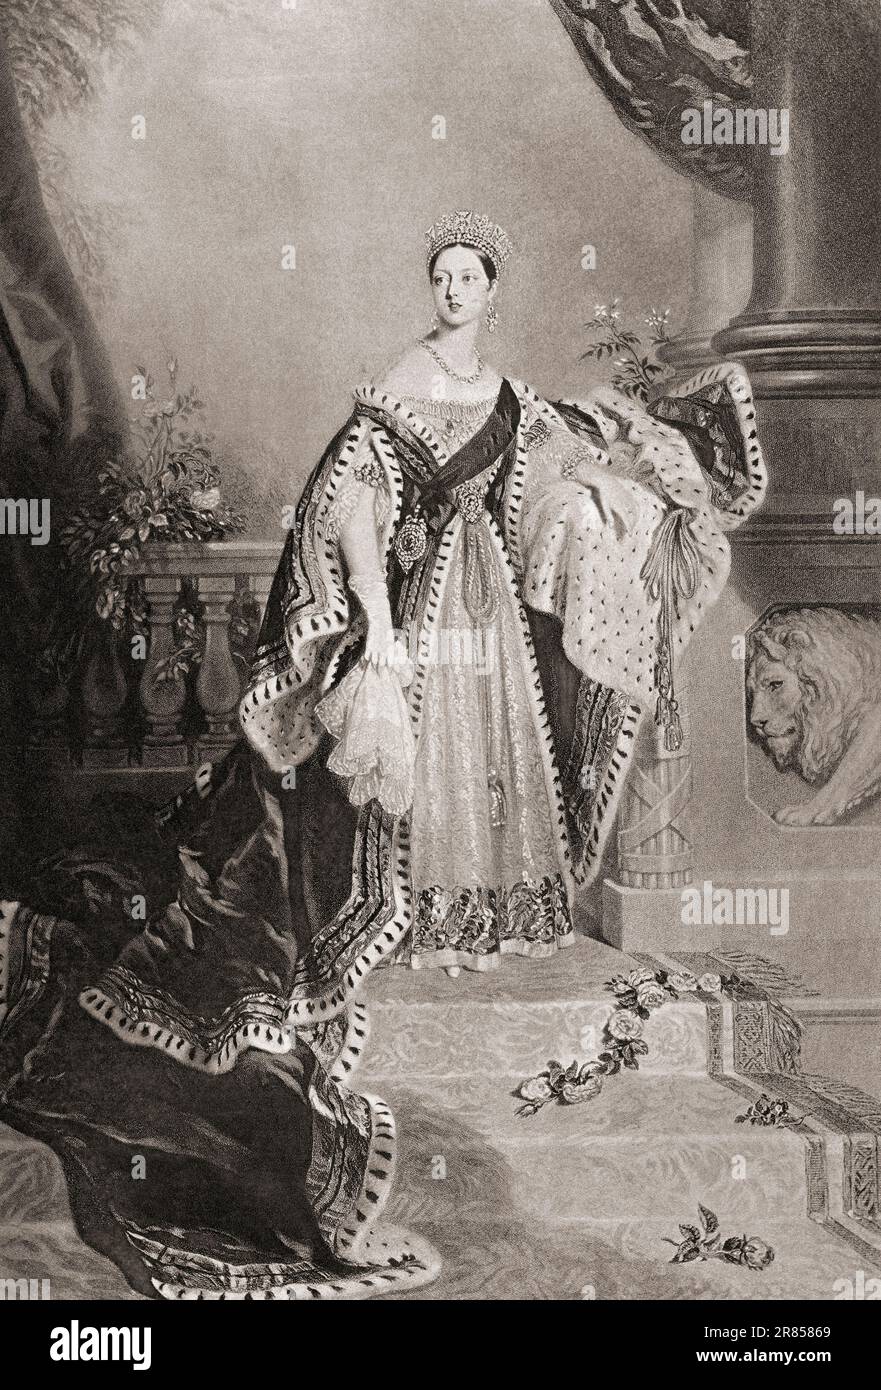 Queen Victoria, Alexandrina Victoria, 1819 – 1901.  From Mezzotints, published 1904. Stock Photo